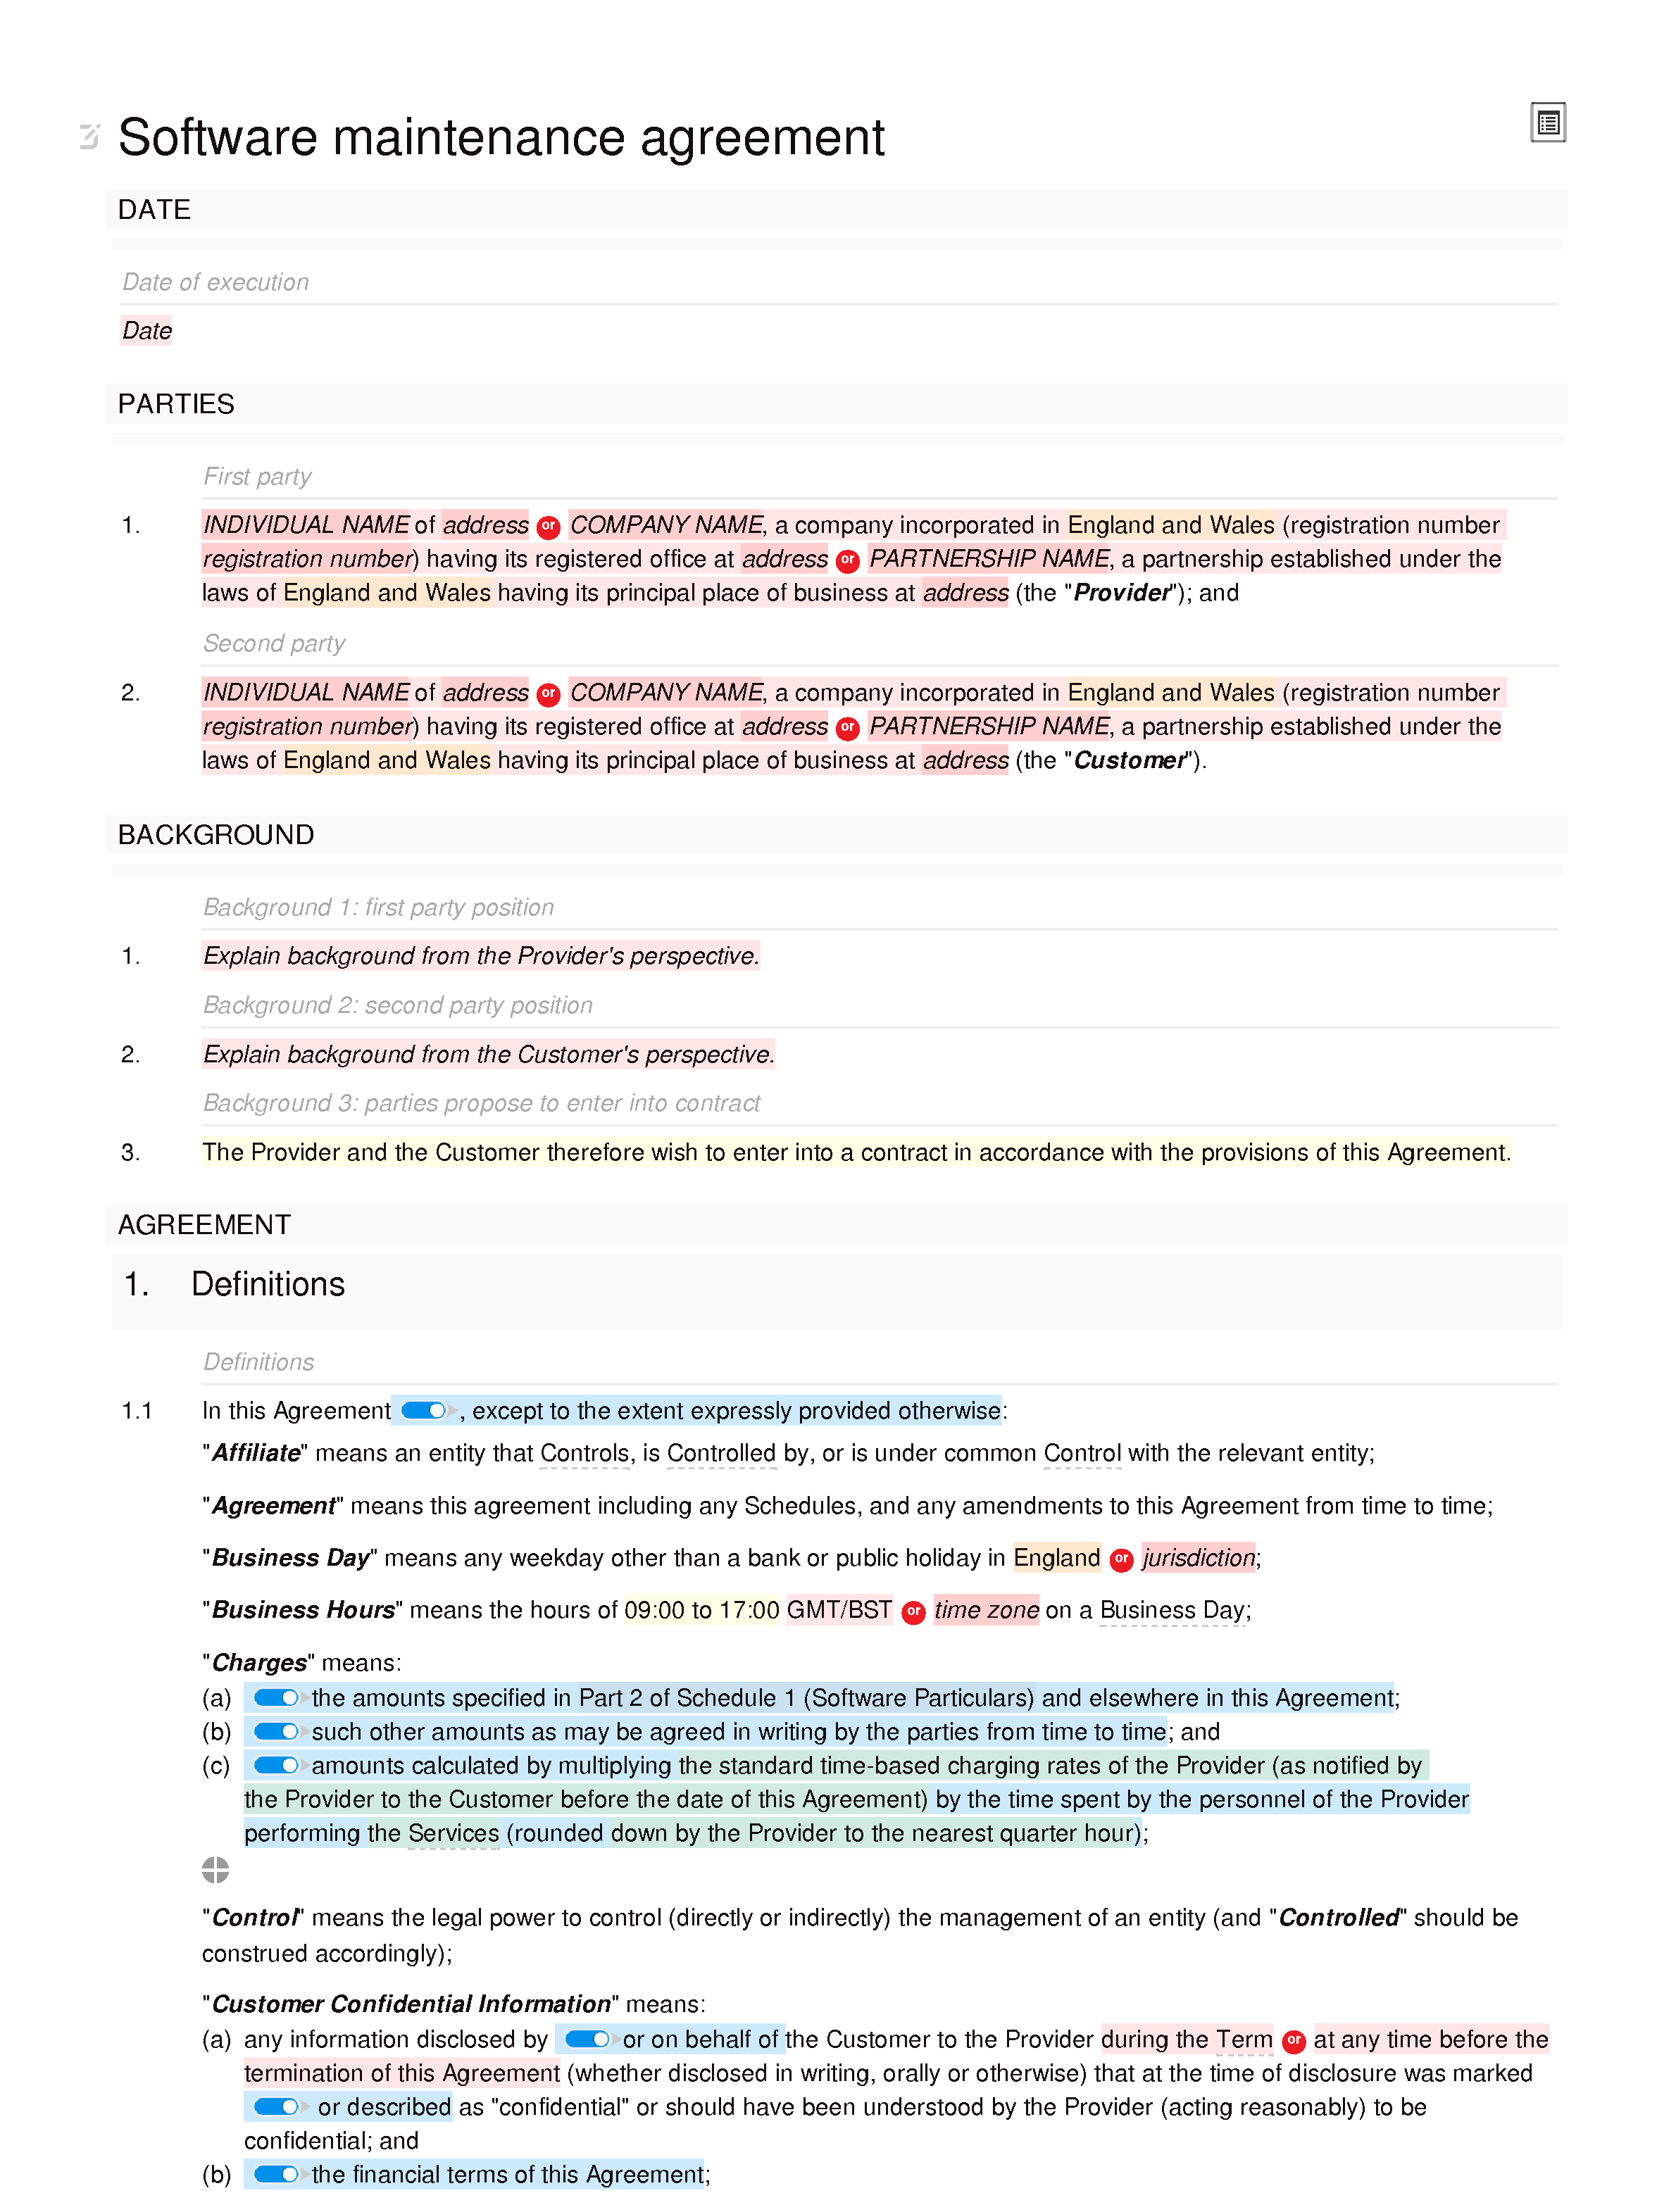 Software maintenance agreement (standard) document editor preview